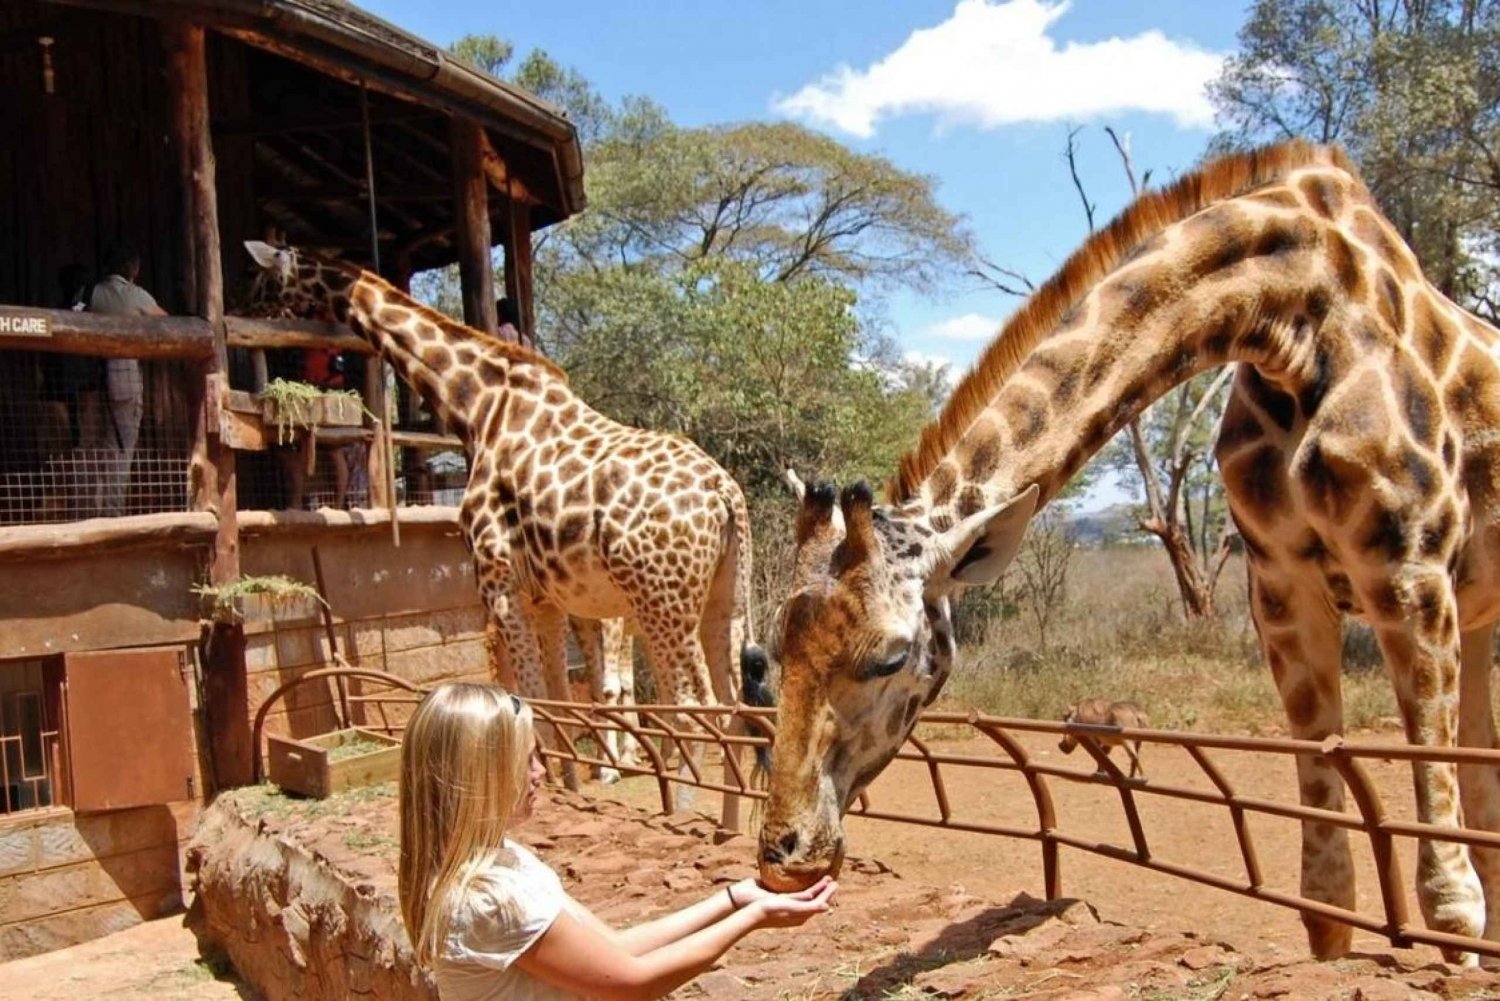 Nairobiparken, elefanter, sjiraffer, bomas og middag med rovdyr